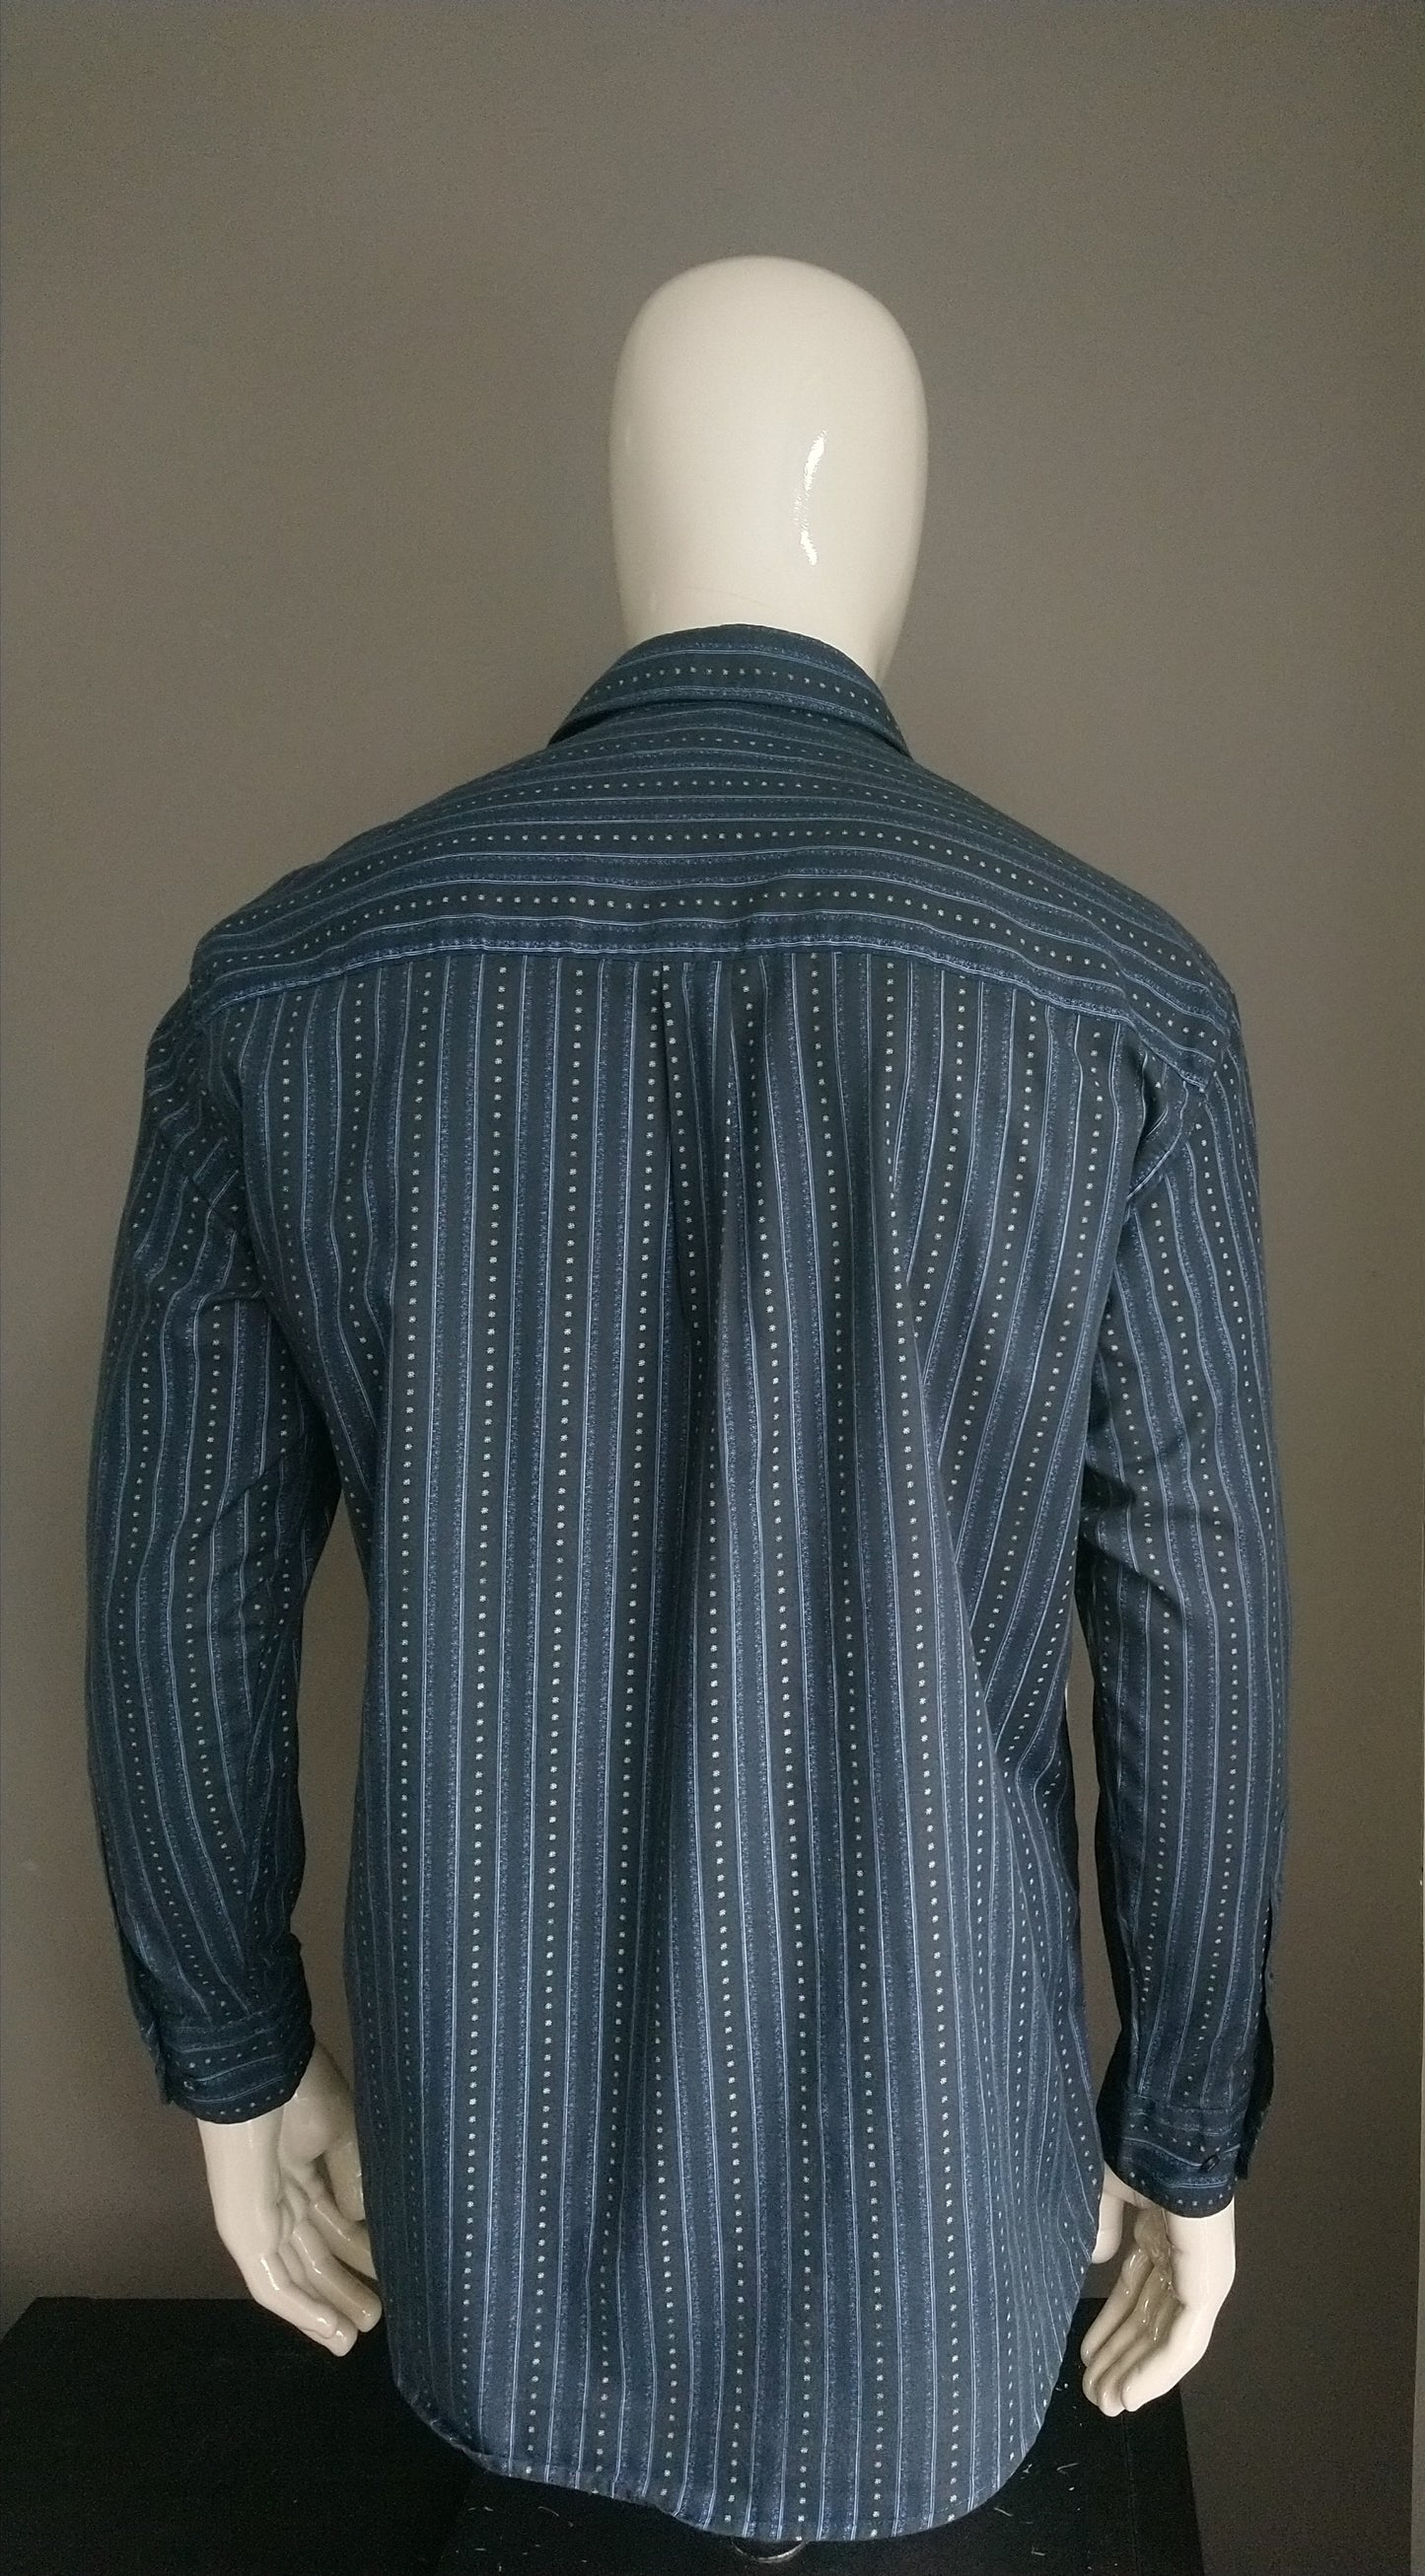 Club Vintage D'Amingo camiseta. Estampado azul gris negro. Tamaño M / L.